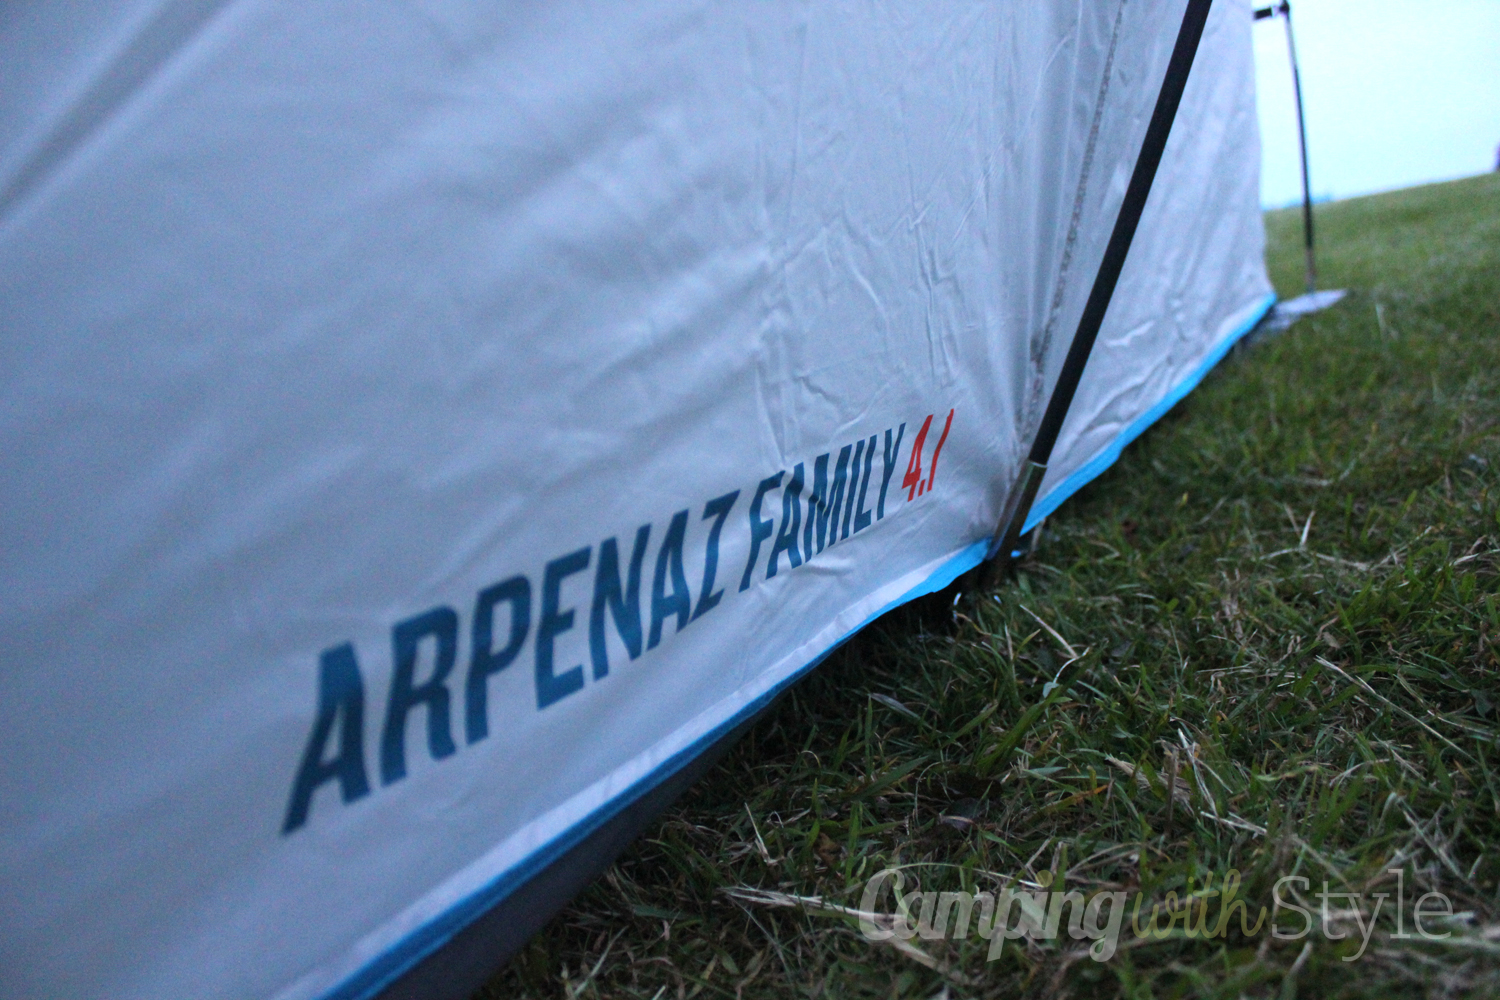 Decathlon Arpenaz family 4+1 tent review